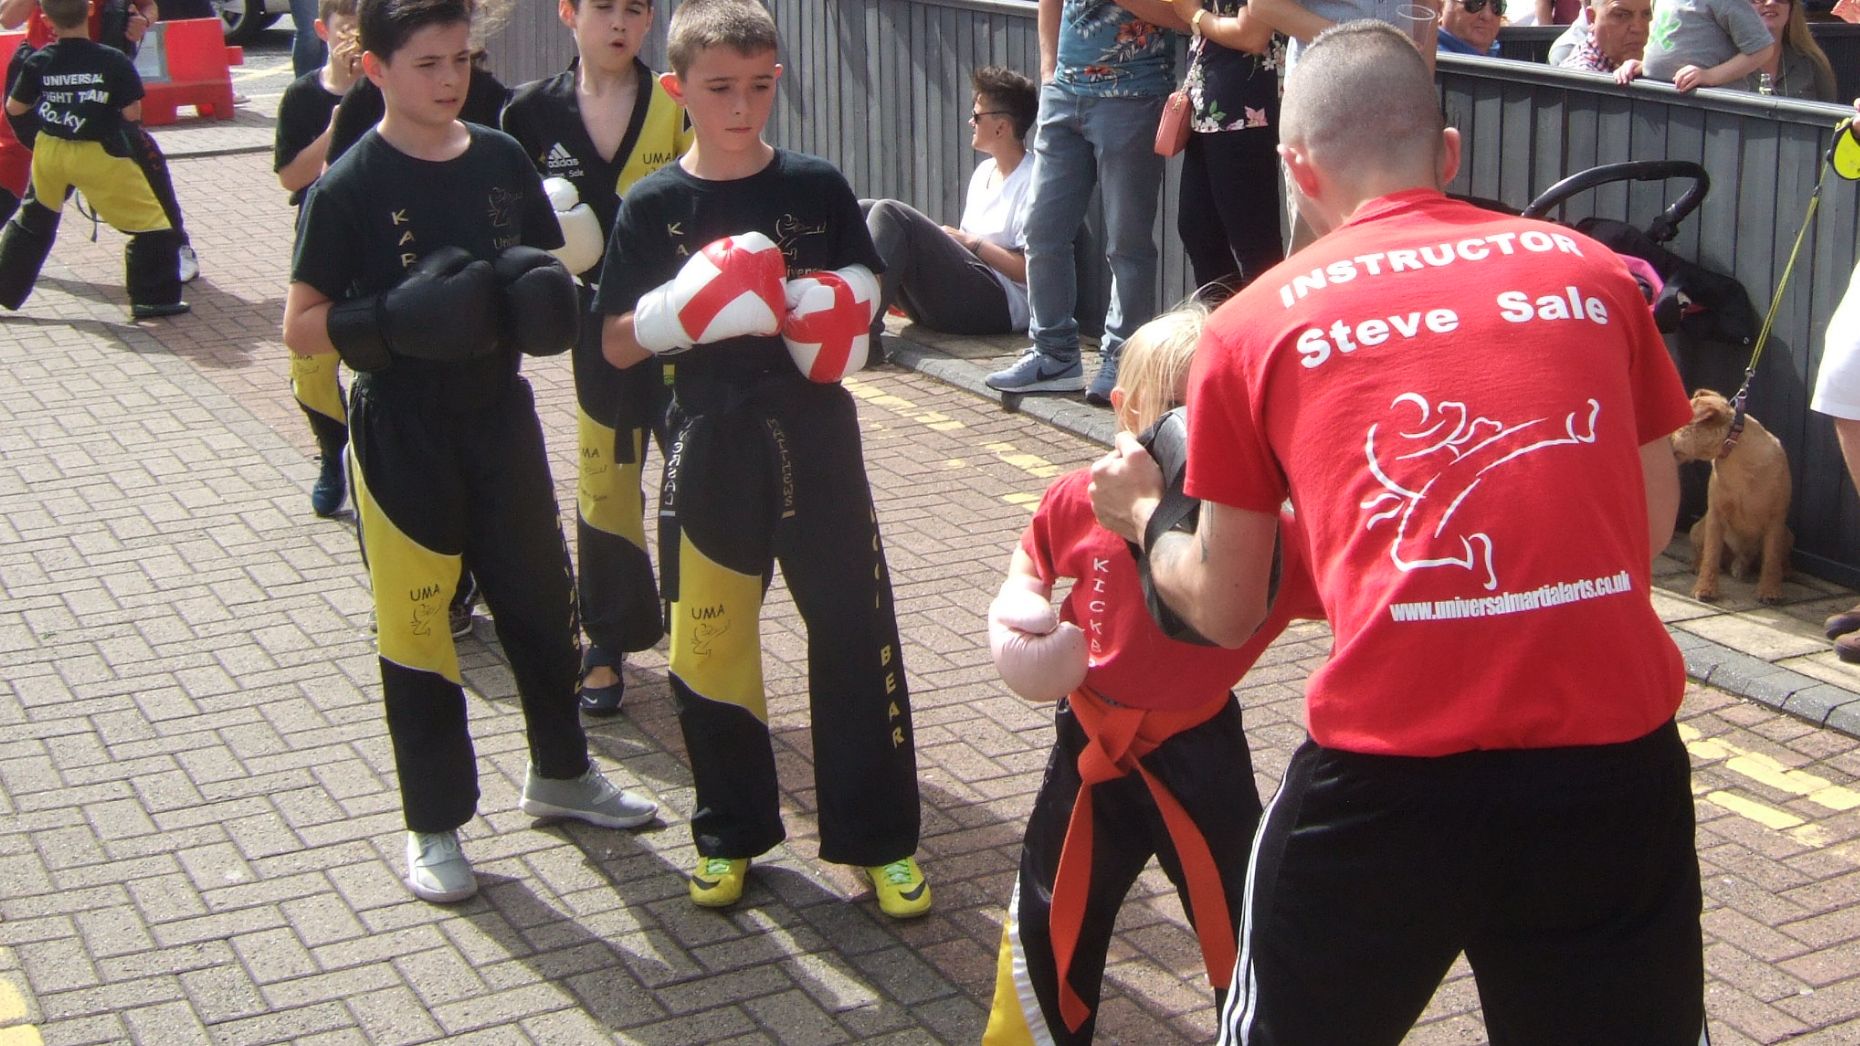 St. Peter's Fete, Universal Martial Arts - Junior Kickboxing demonstration